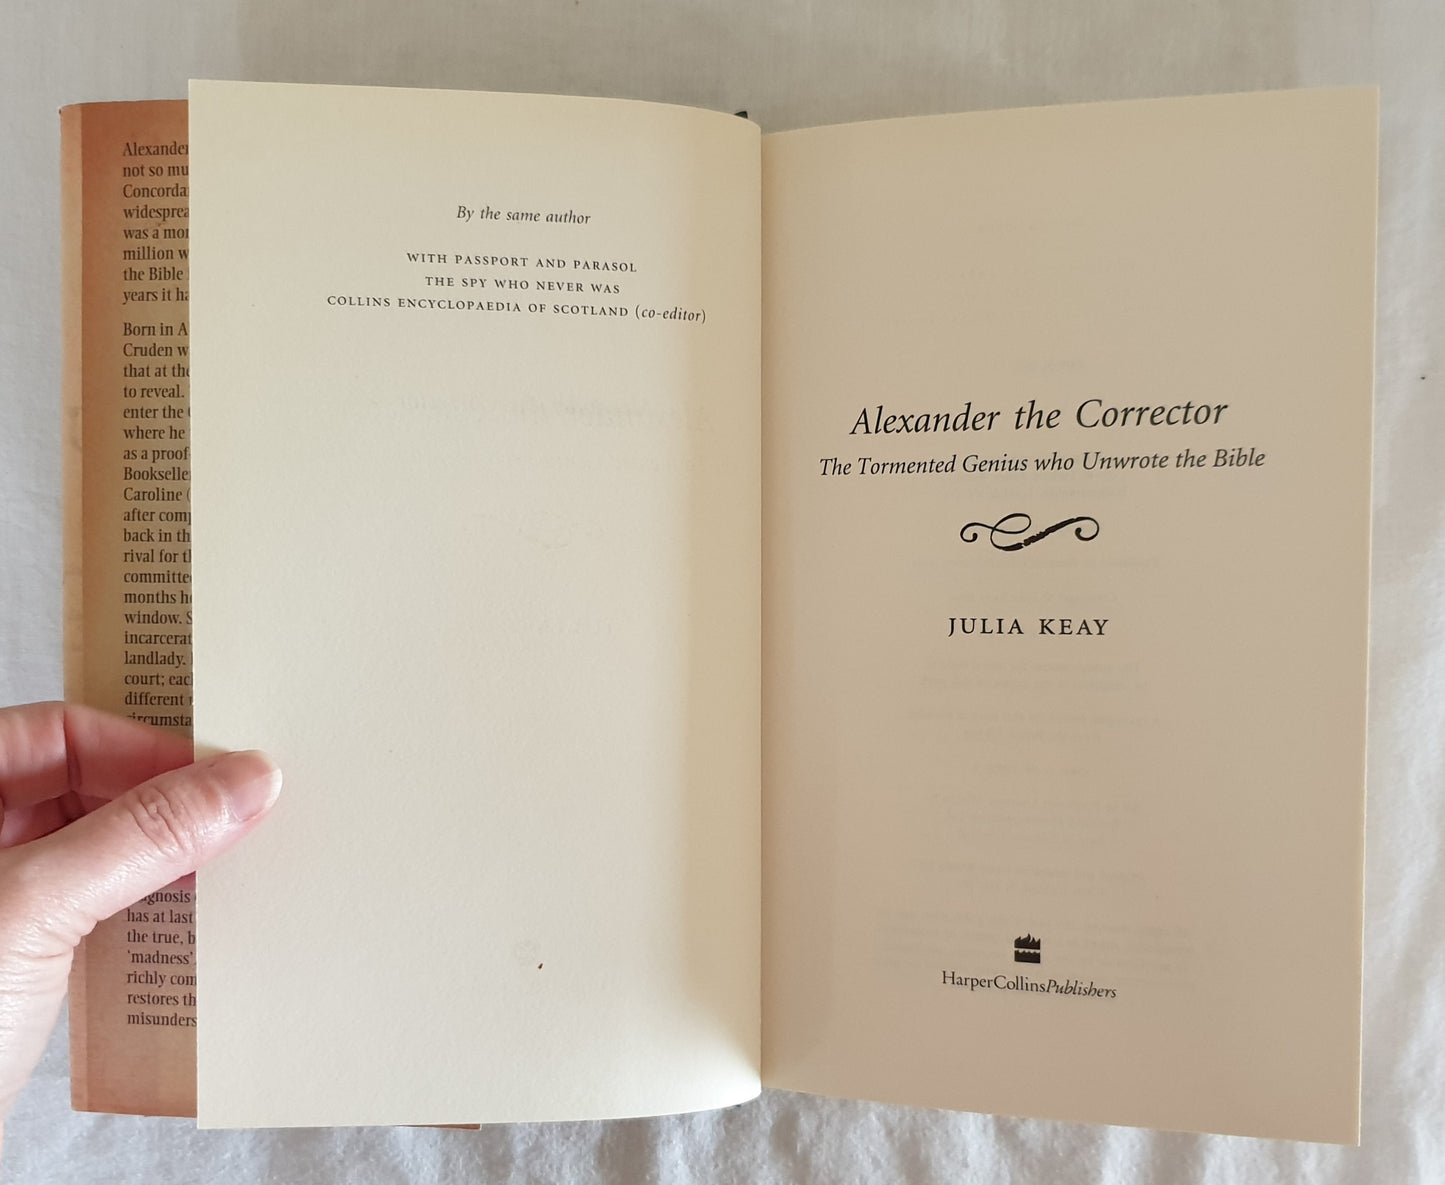 Alexander The Corrector by Julia Keay